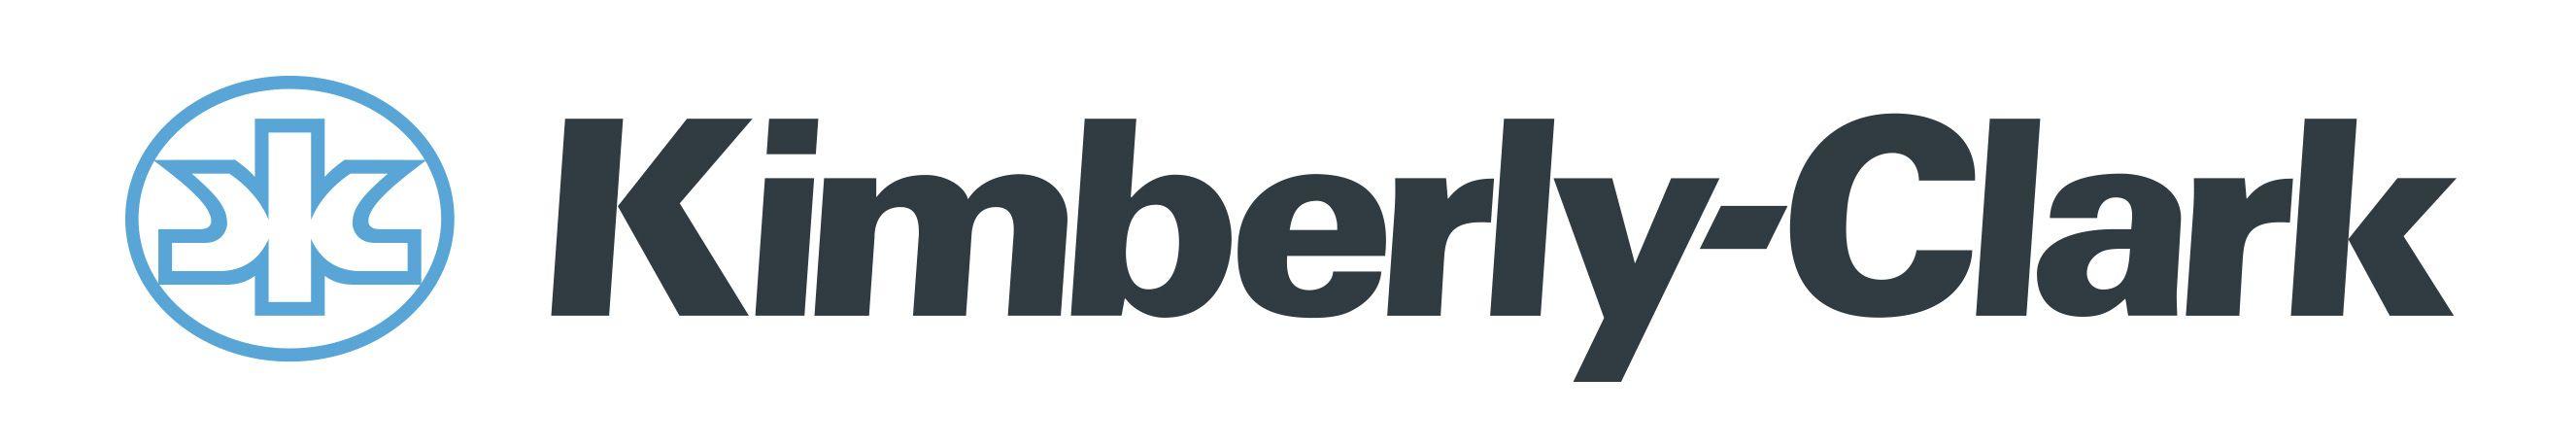 Kimberly-Clark Logo - A Success Story: Kimberly-Clark | WMC